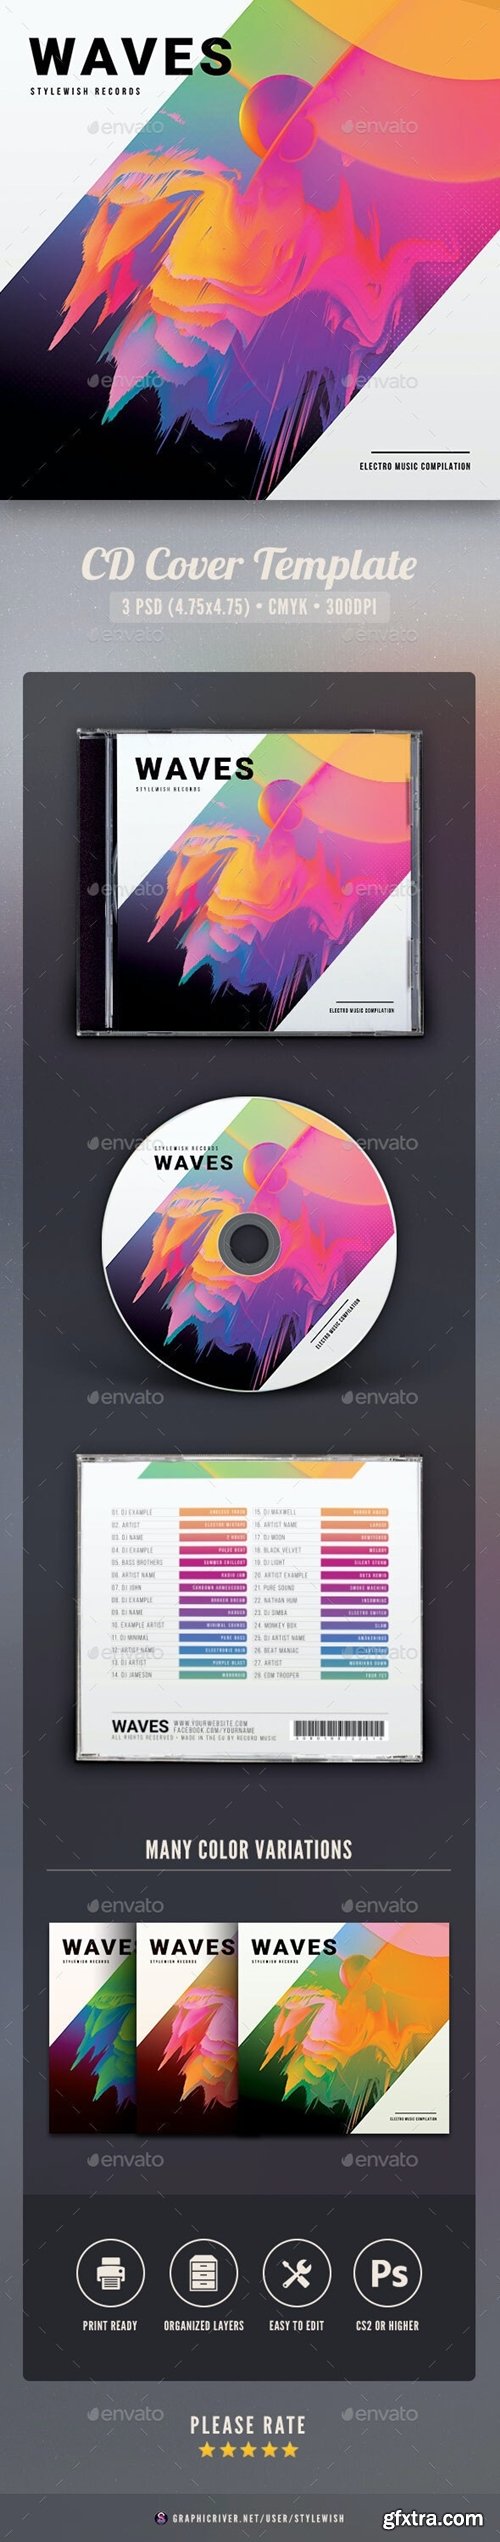 GraphicRiver- Waves CD Cover Artwork 34444435